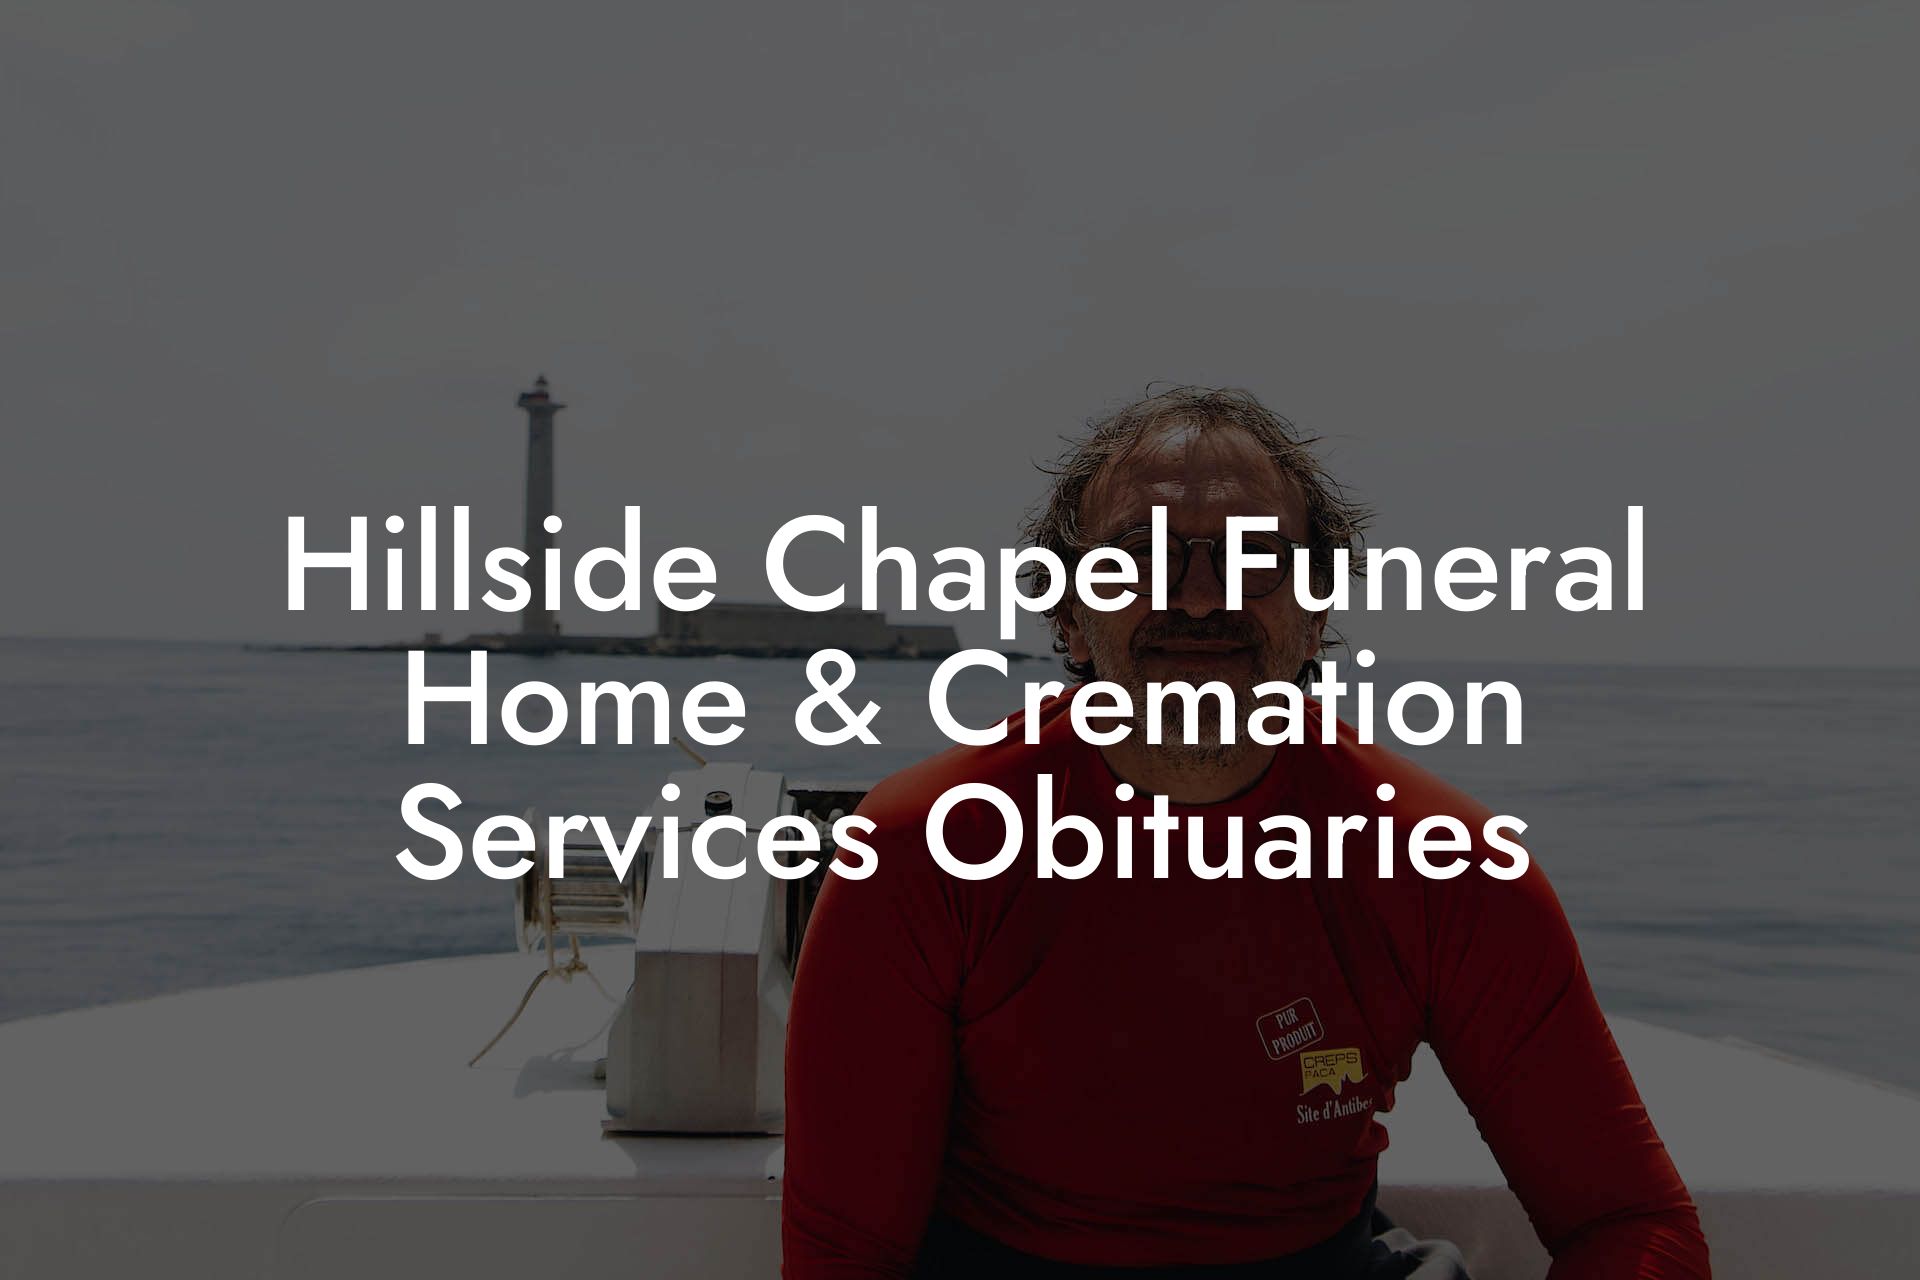 Hillside Chapel Funeral Home & Cremation Services Obituaries